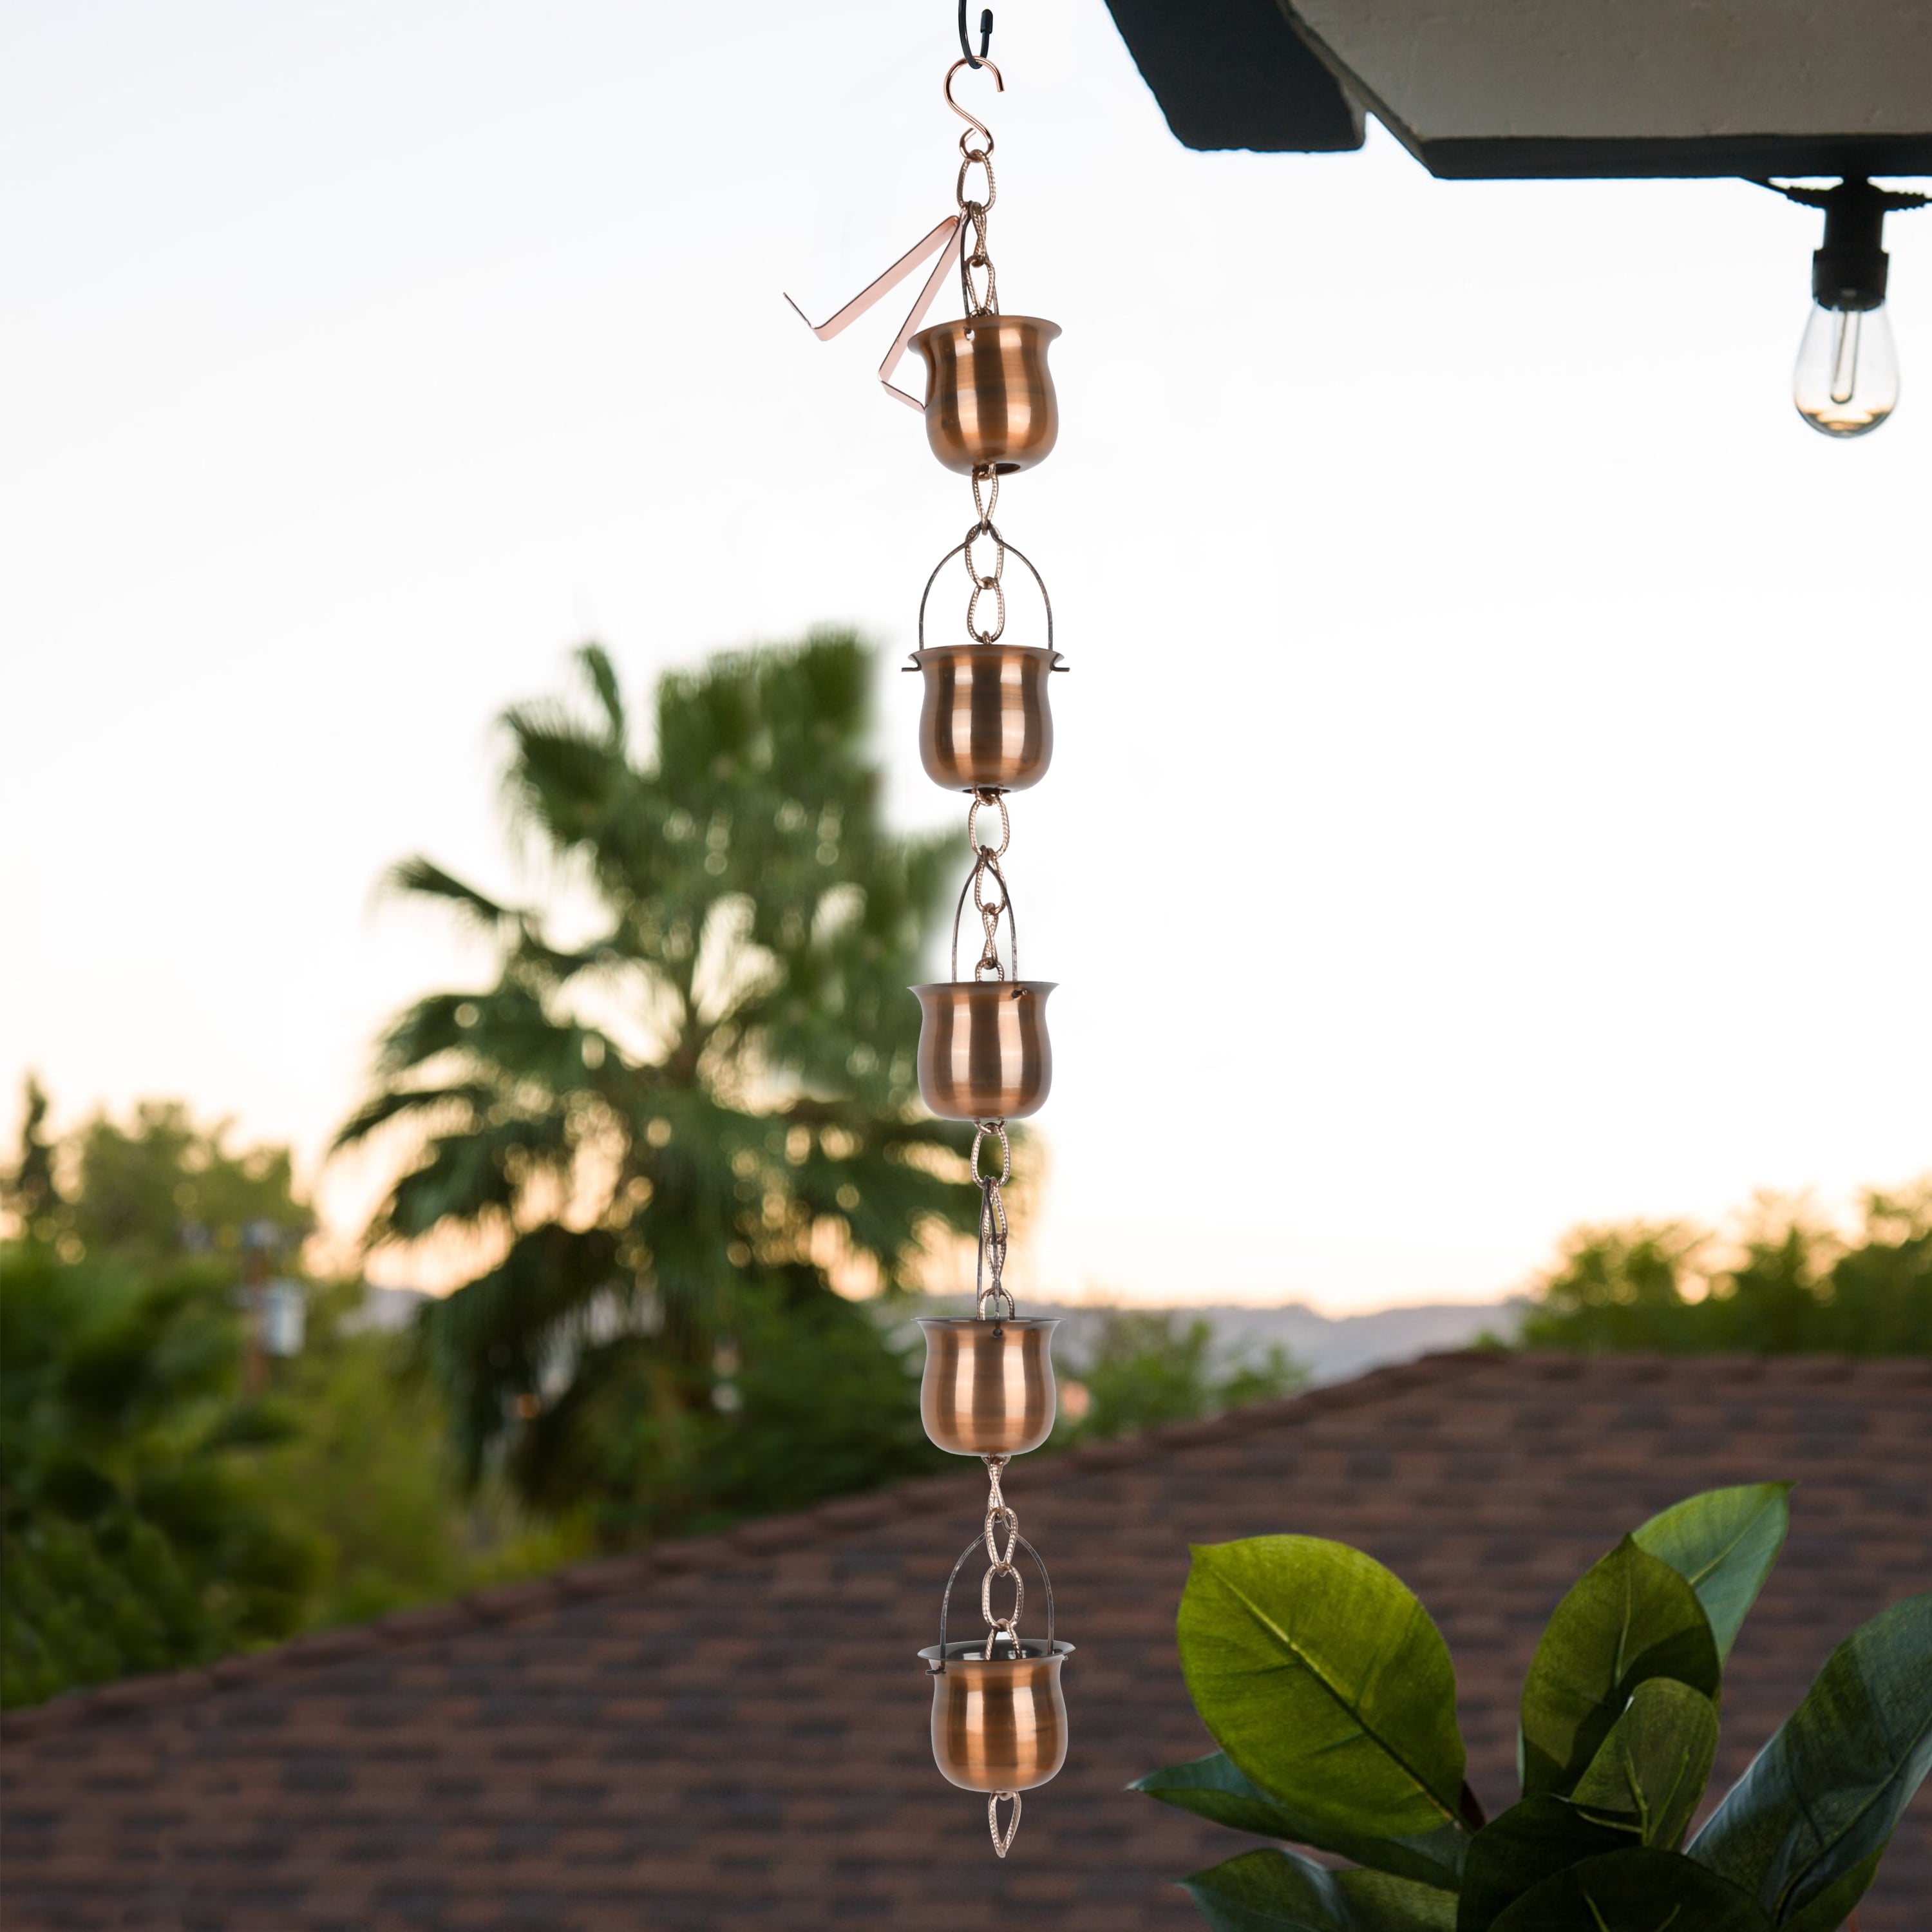 Marrgon Copper Rain Chain Decorative Chimes  Cups Replace Gutter Downspo - 2